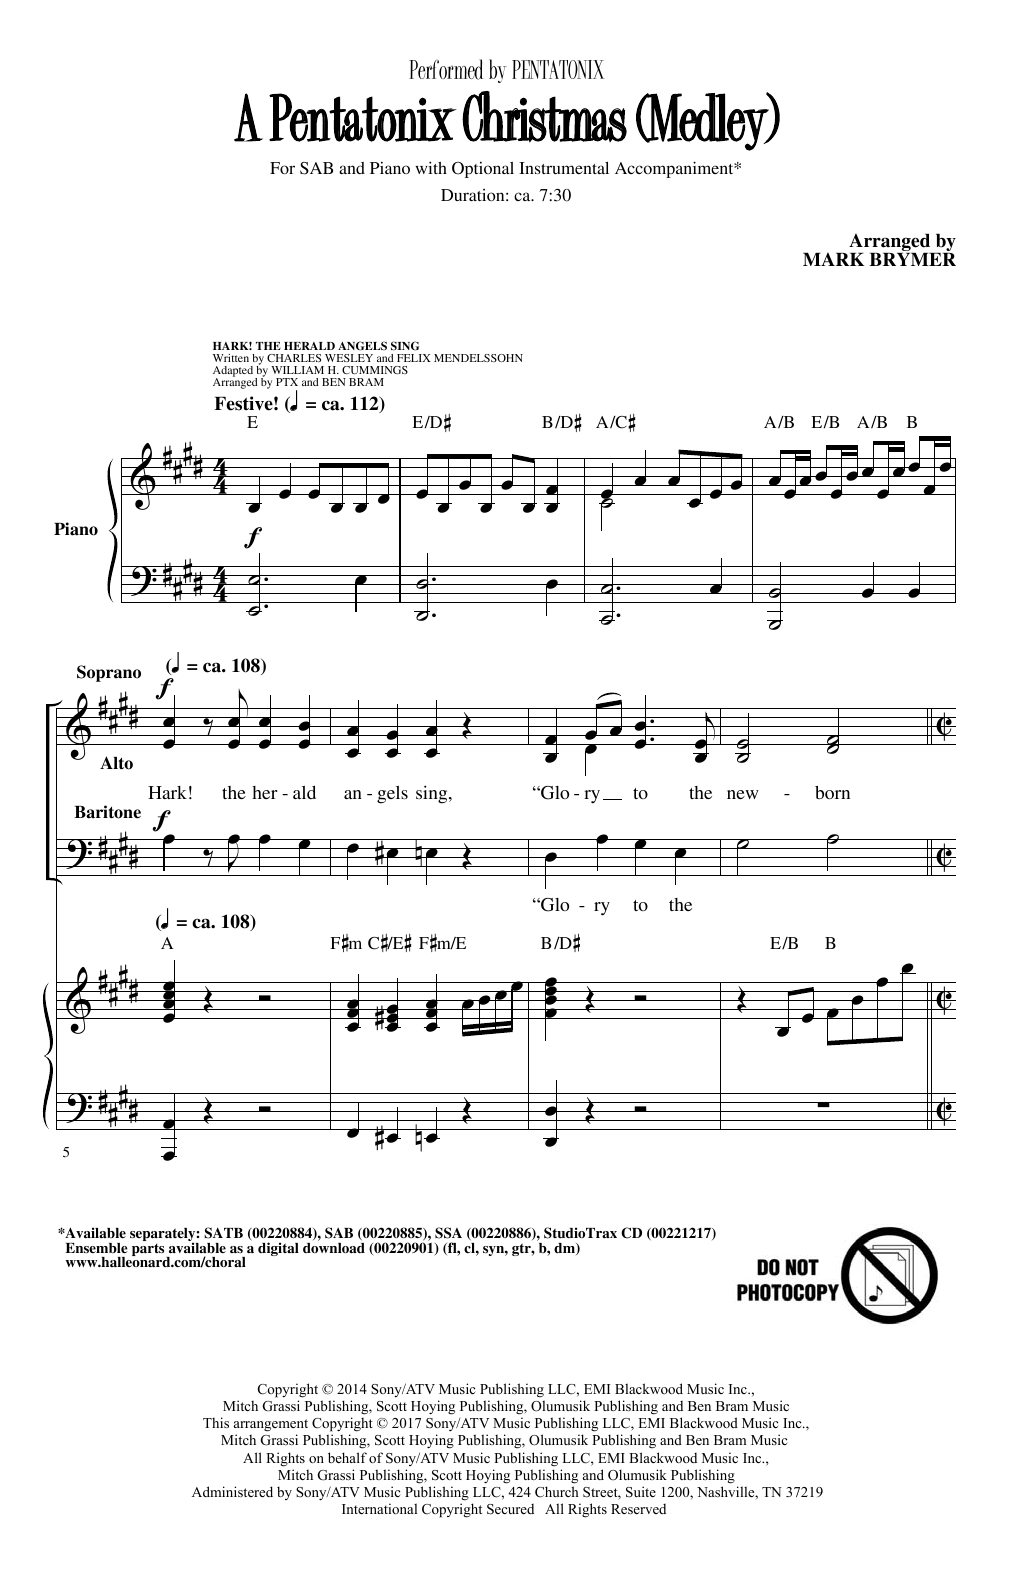 Pentatonix A Pentatonix Christmas (Medley) (arr. Mark Brymer) sheet music notes and chords arranged for SATB Choir